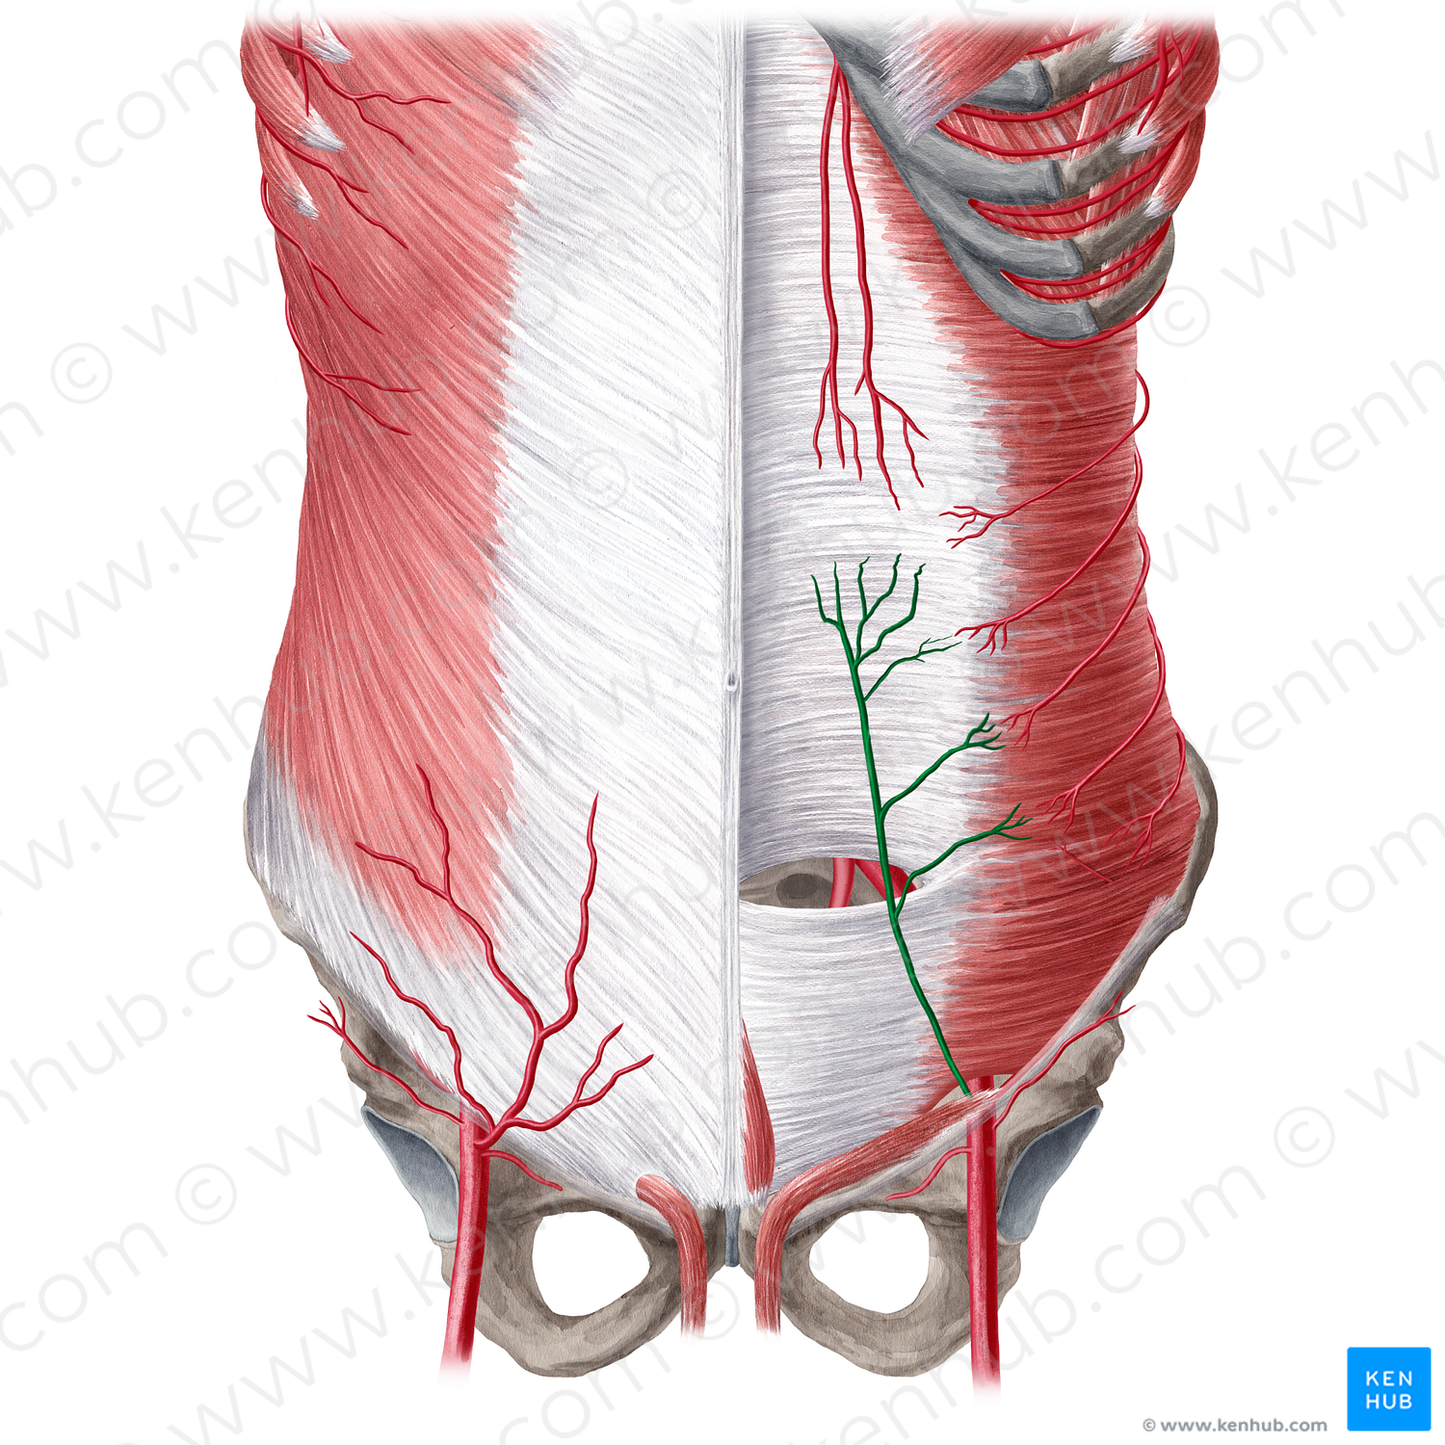 Inferior epigastric artery (#1188)